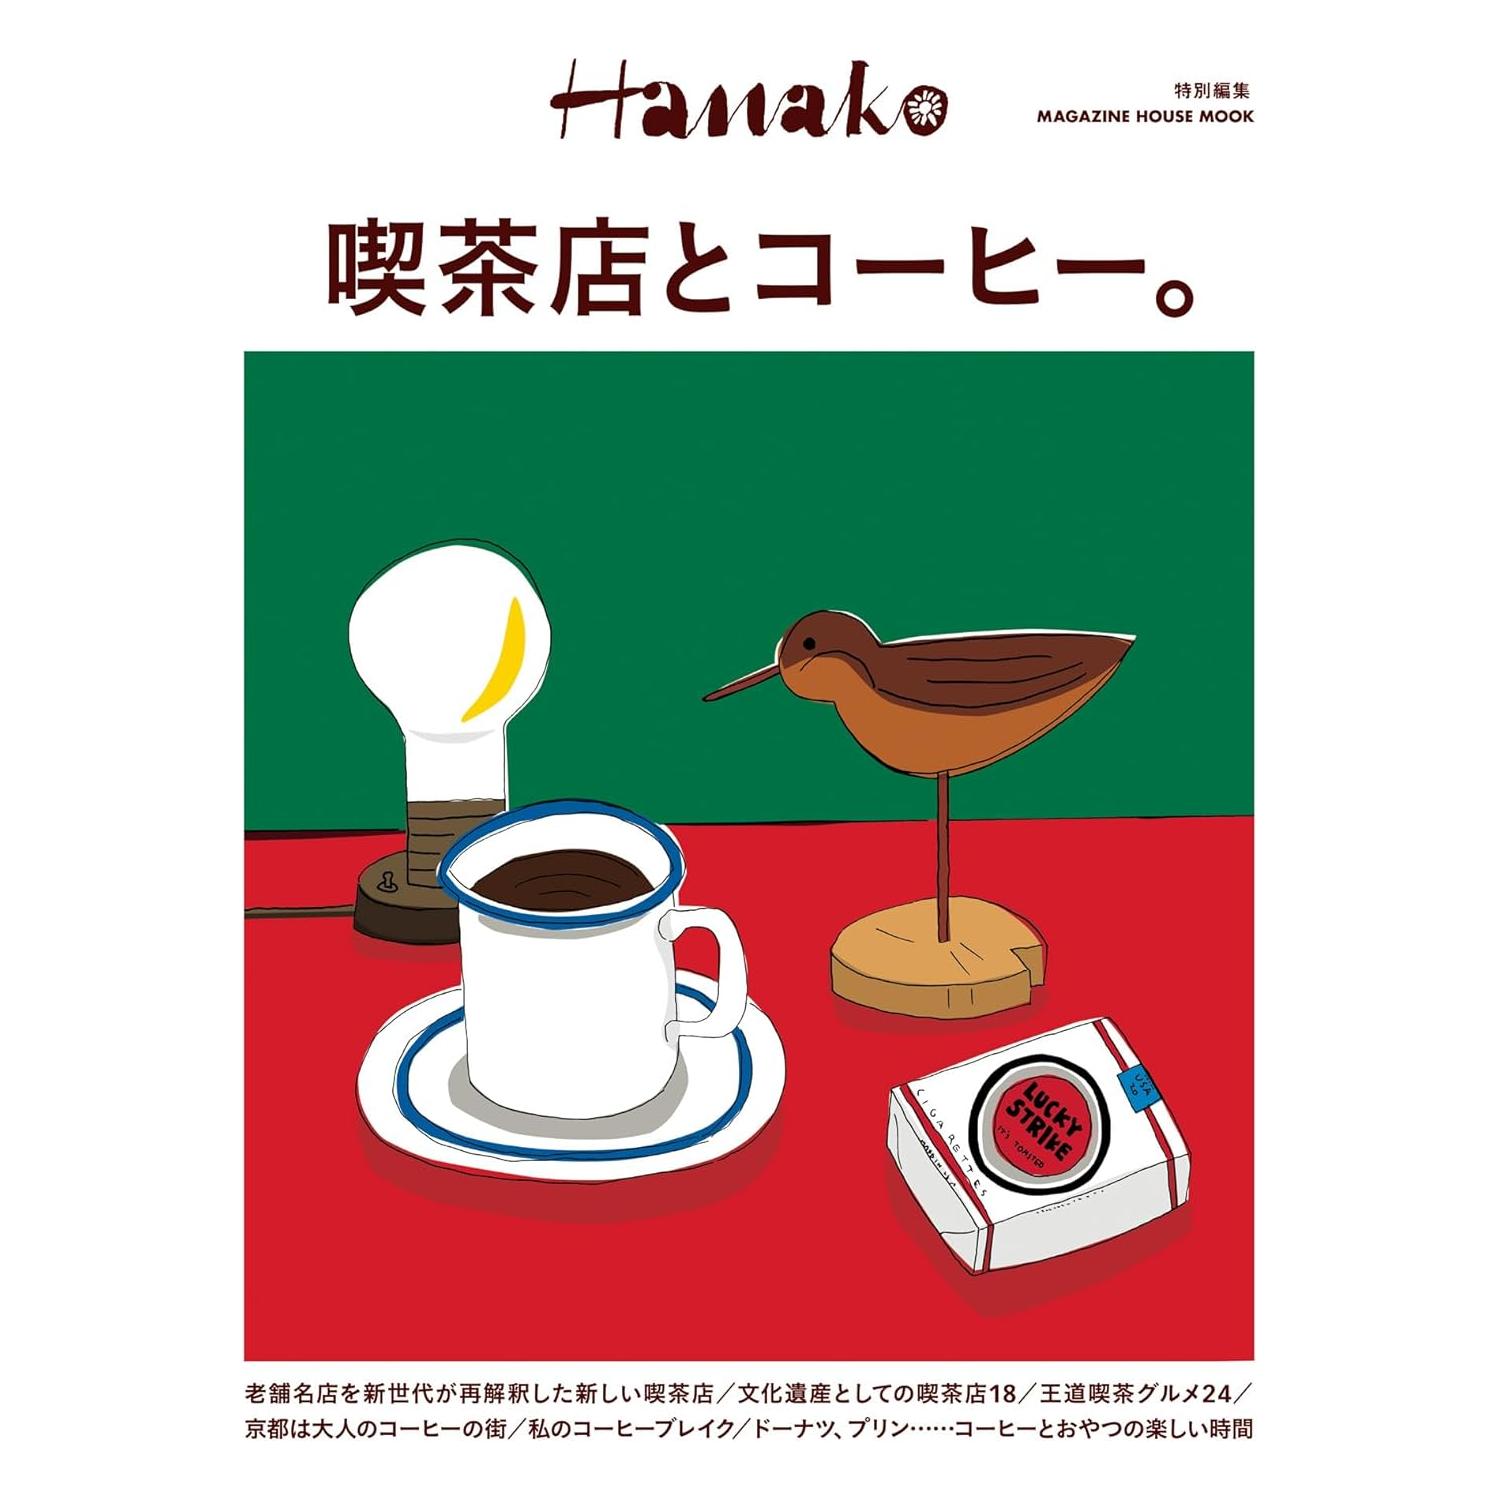 Hanako Magazine Coffee Issue